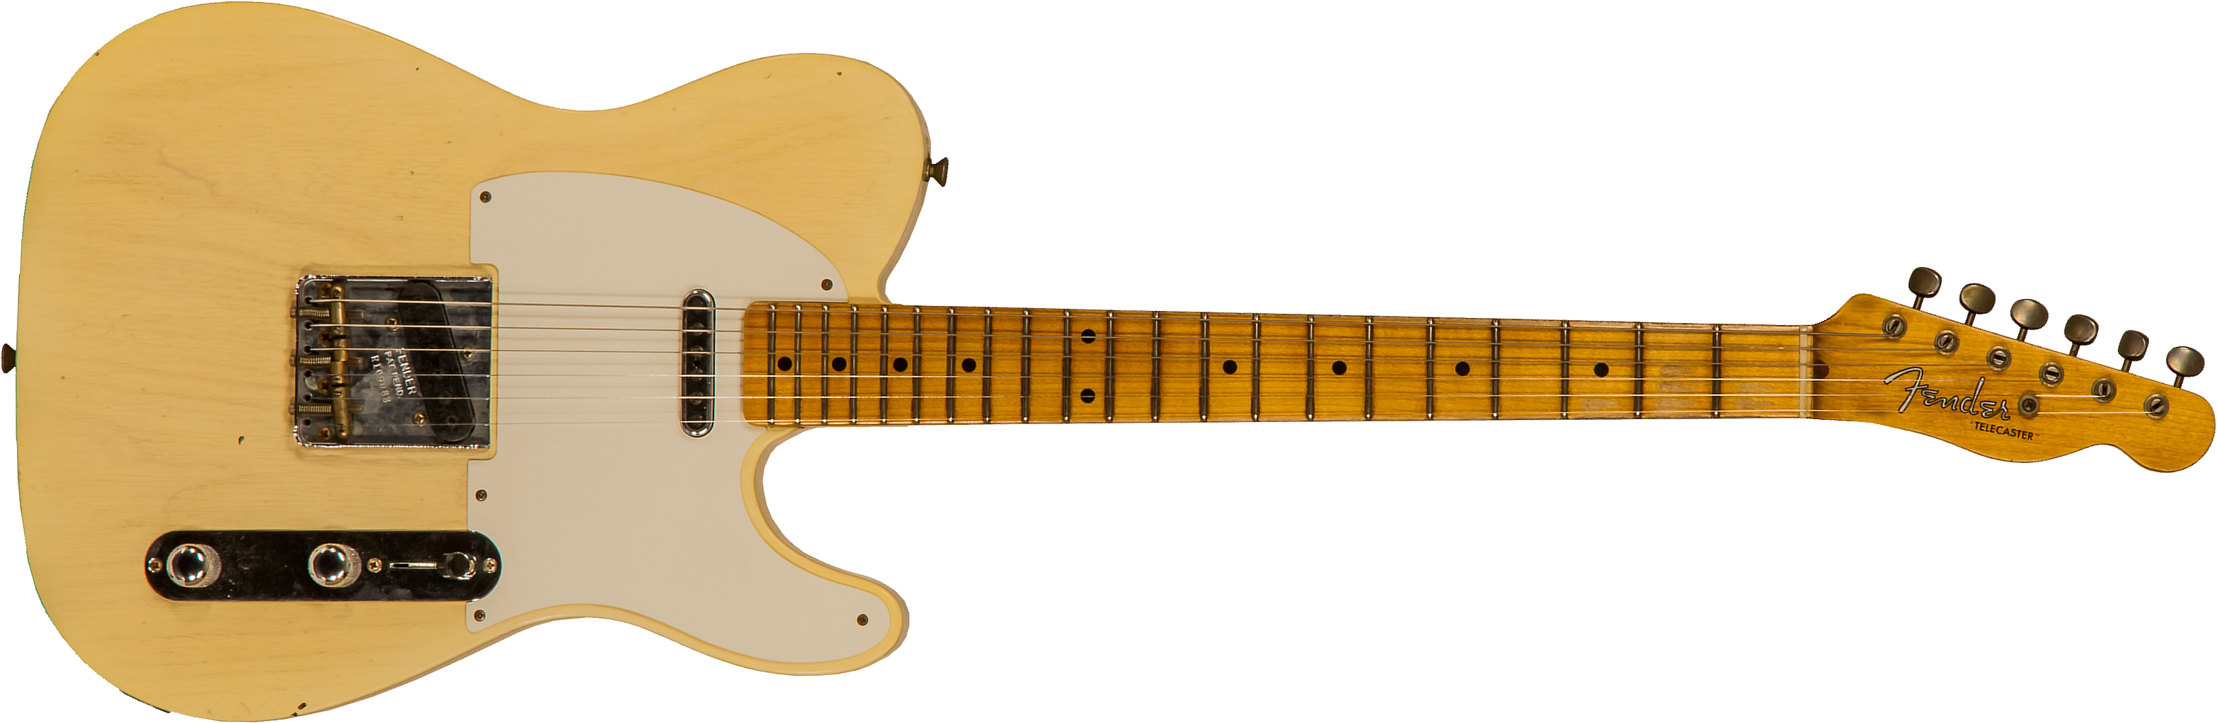 Fender Custom Shop Tele Tomatillo Ltd 2s Ht Mn #r109088 - Journeyman Relic Natural Blonde - Tel shape electric guitar - Main picture